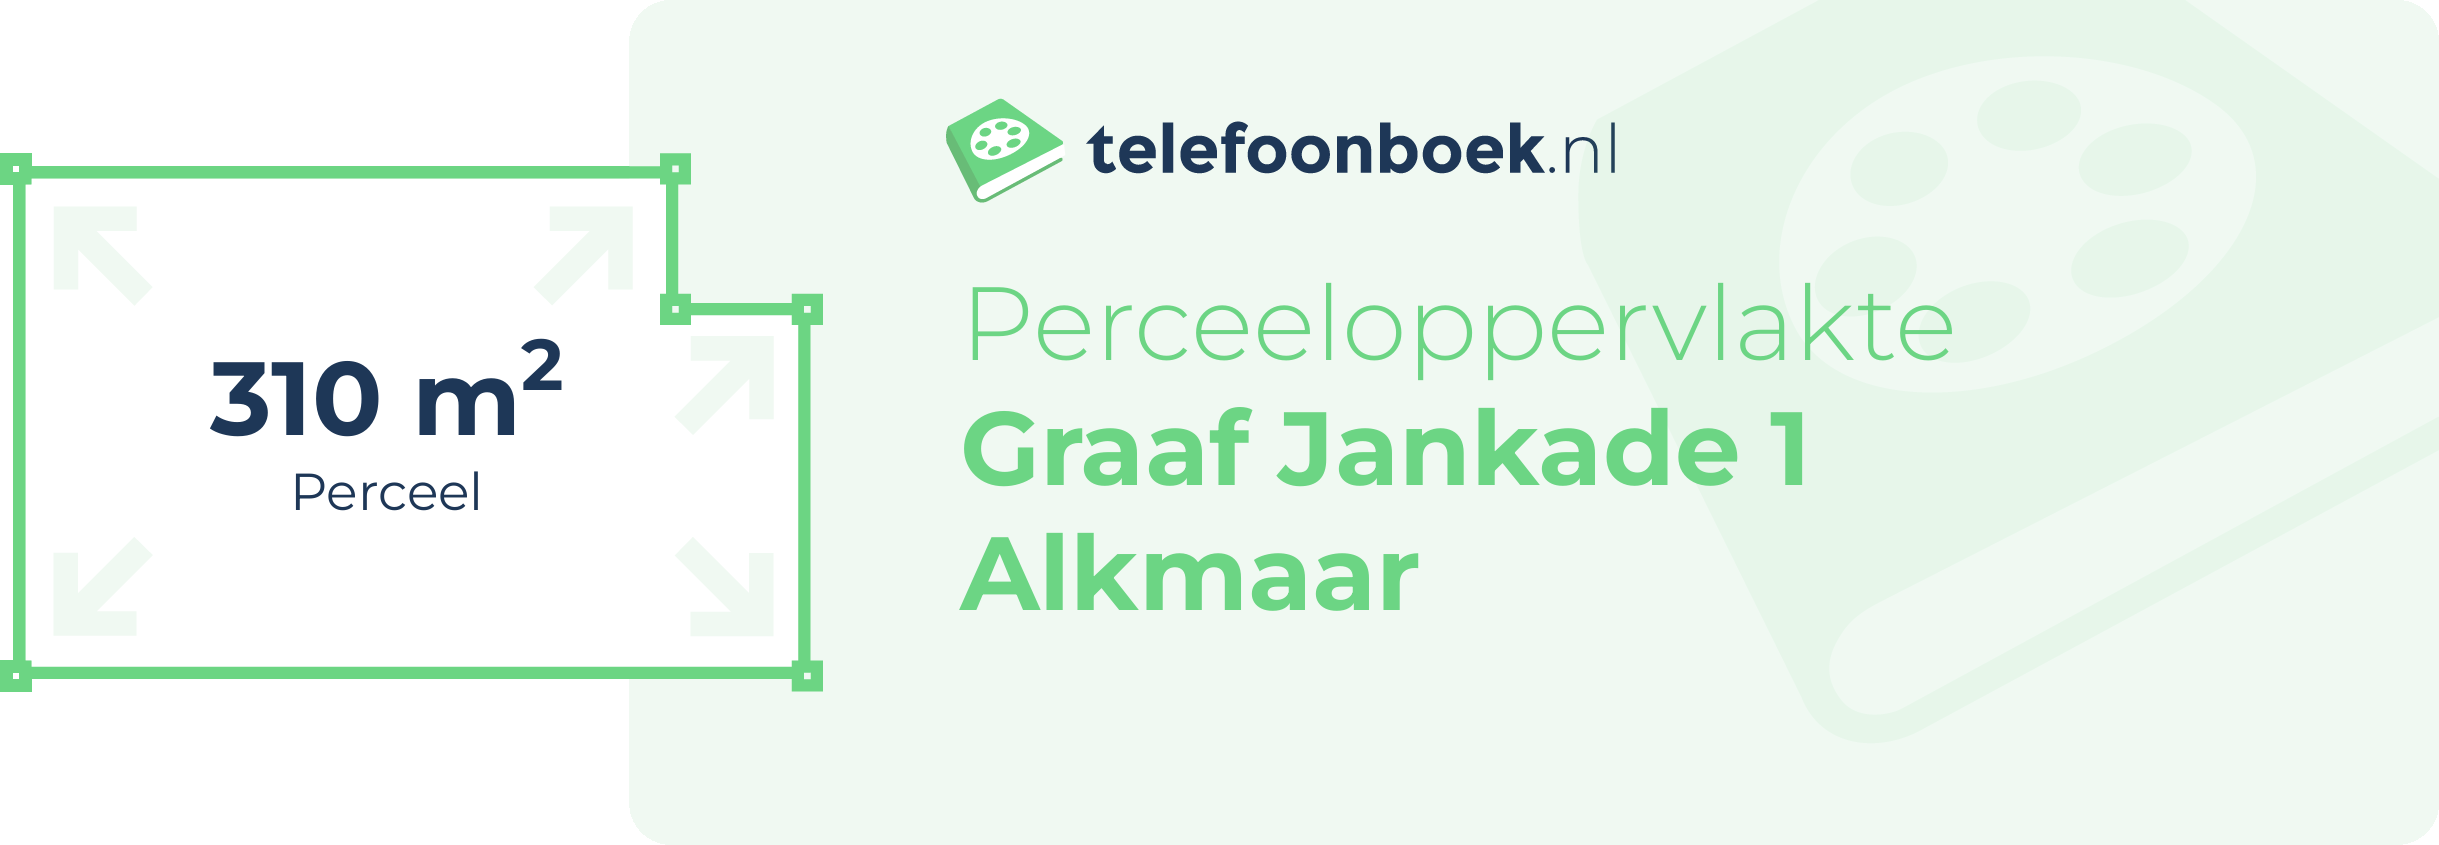 Perceeloppervlakte Graaf Jankade 1 Alkmaar